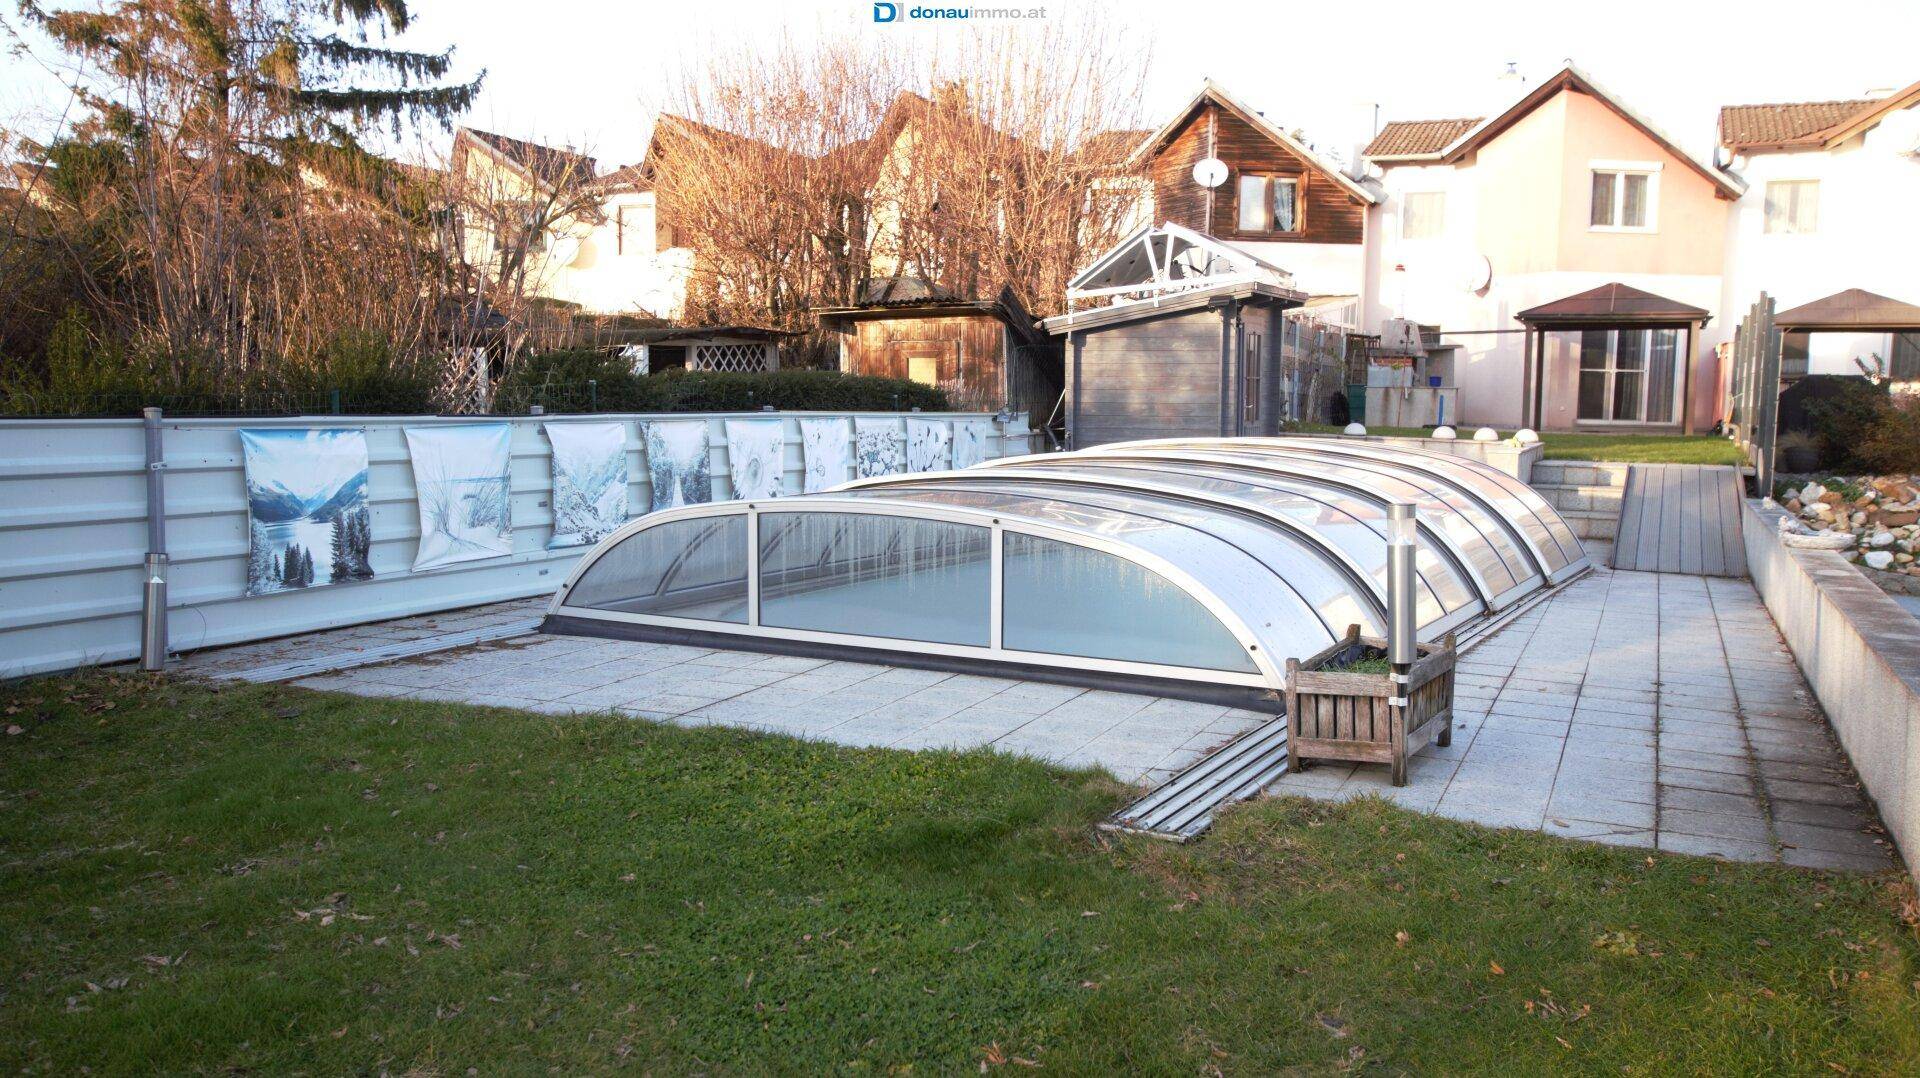 Einfamilienhaus mit Swimming Pool Nähe Wolkersdorf